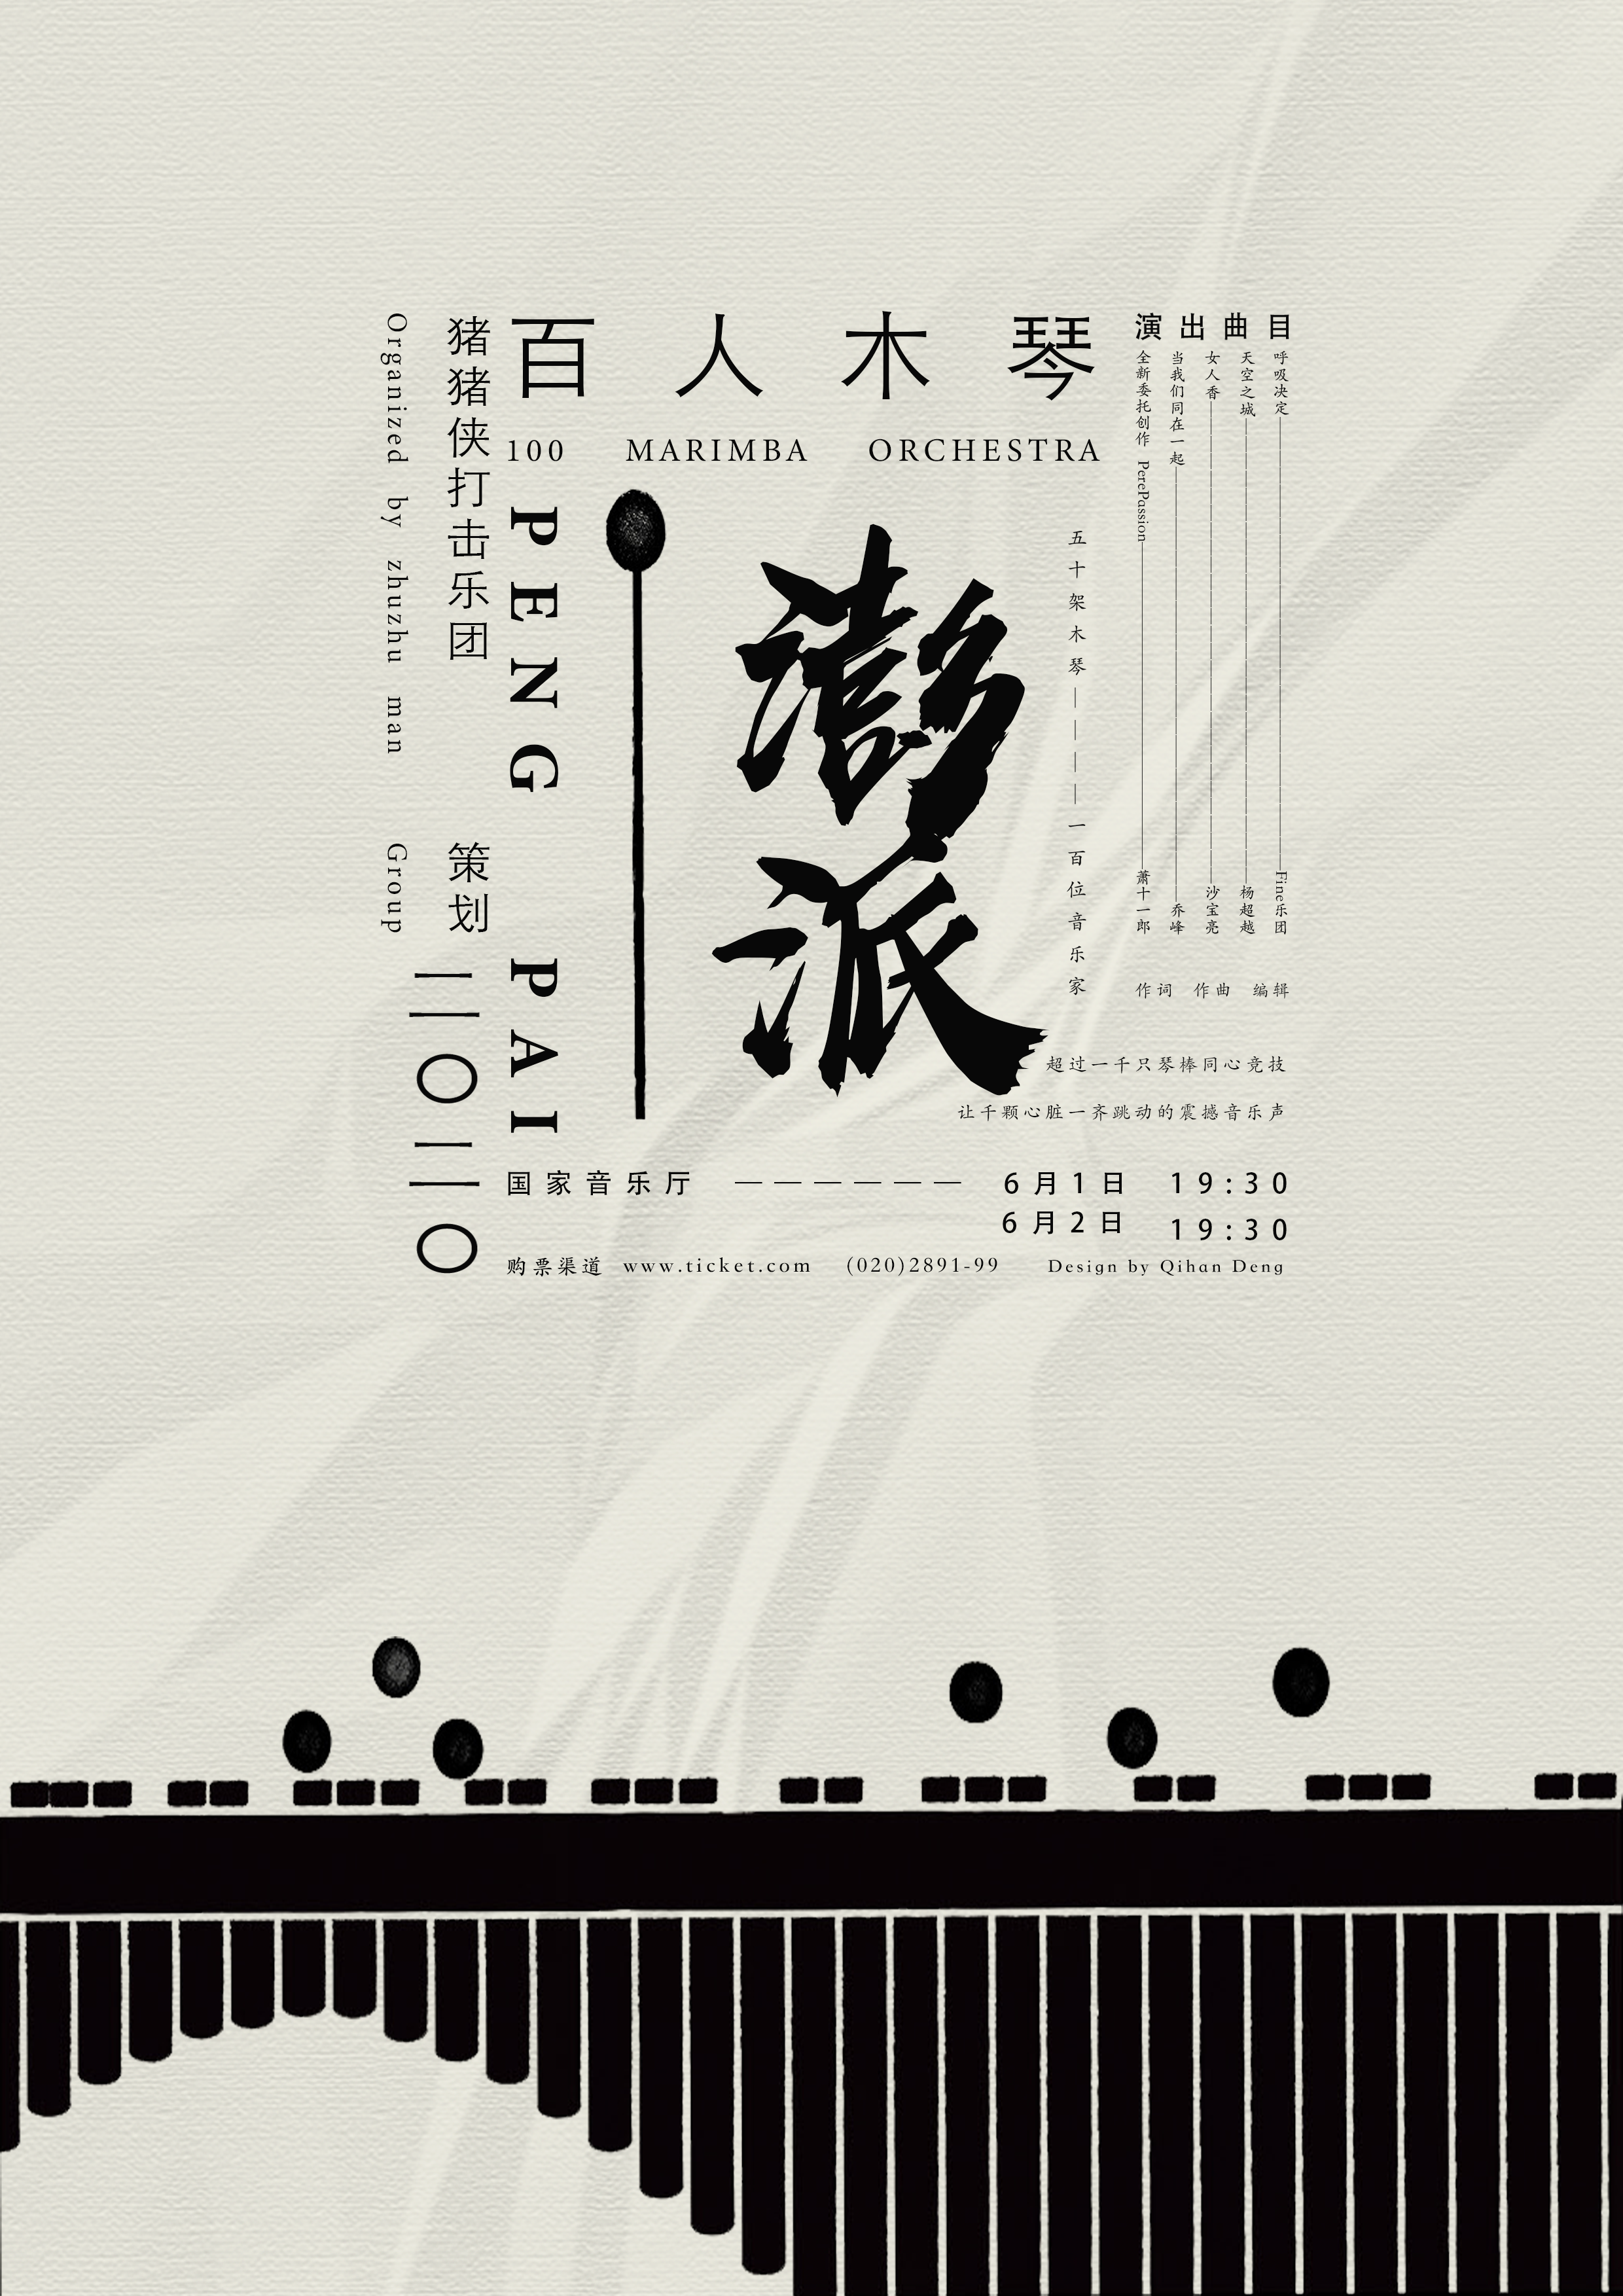 6P ‘澎派’ Creative Design of Chinese Phrases